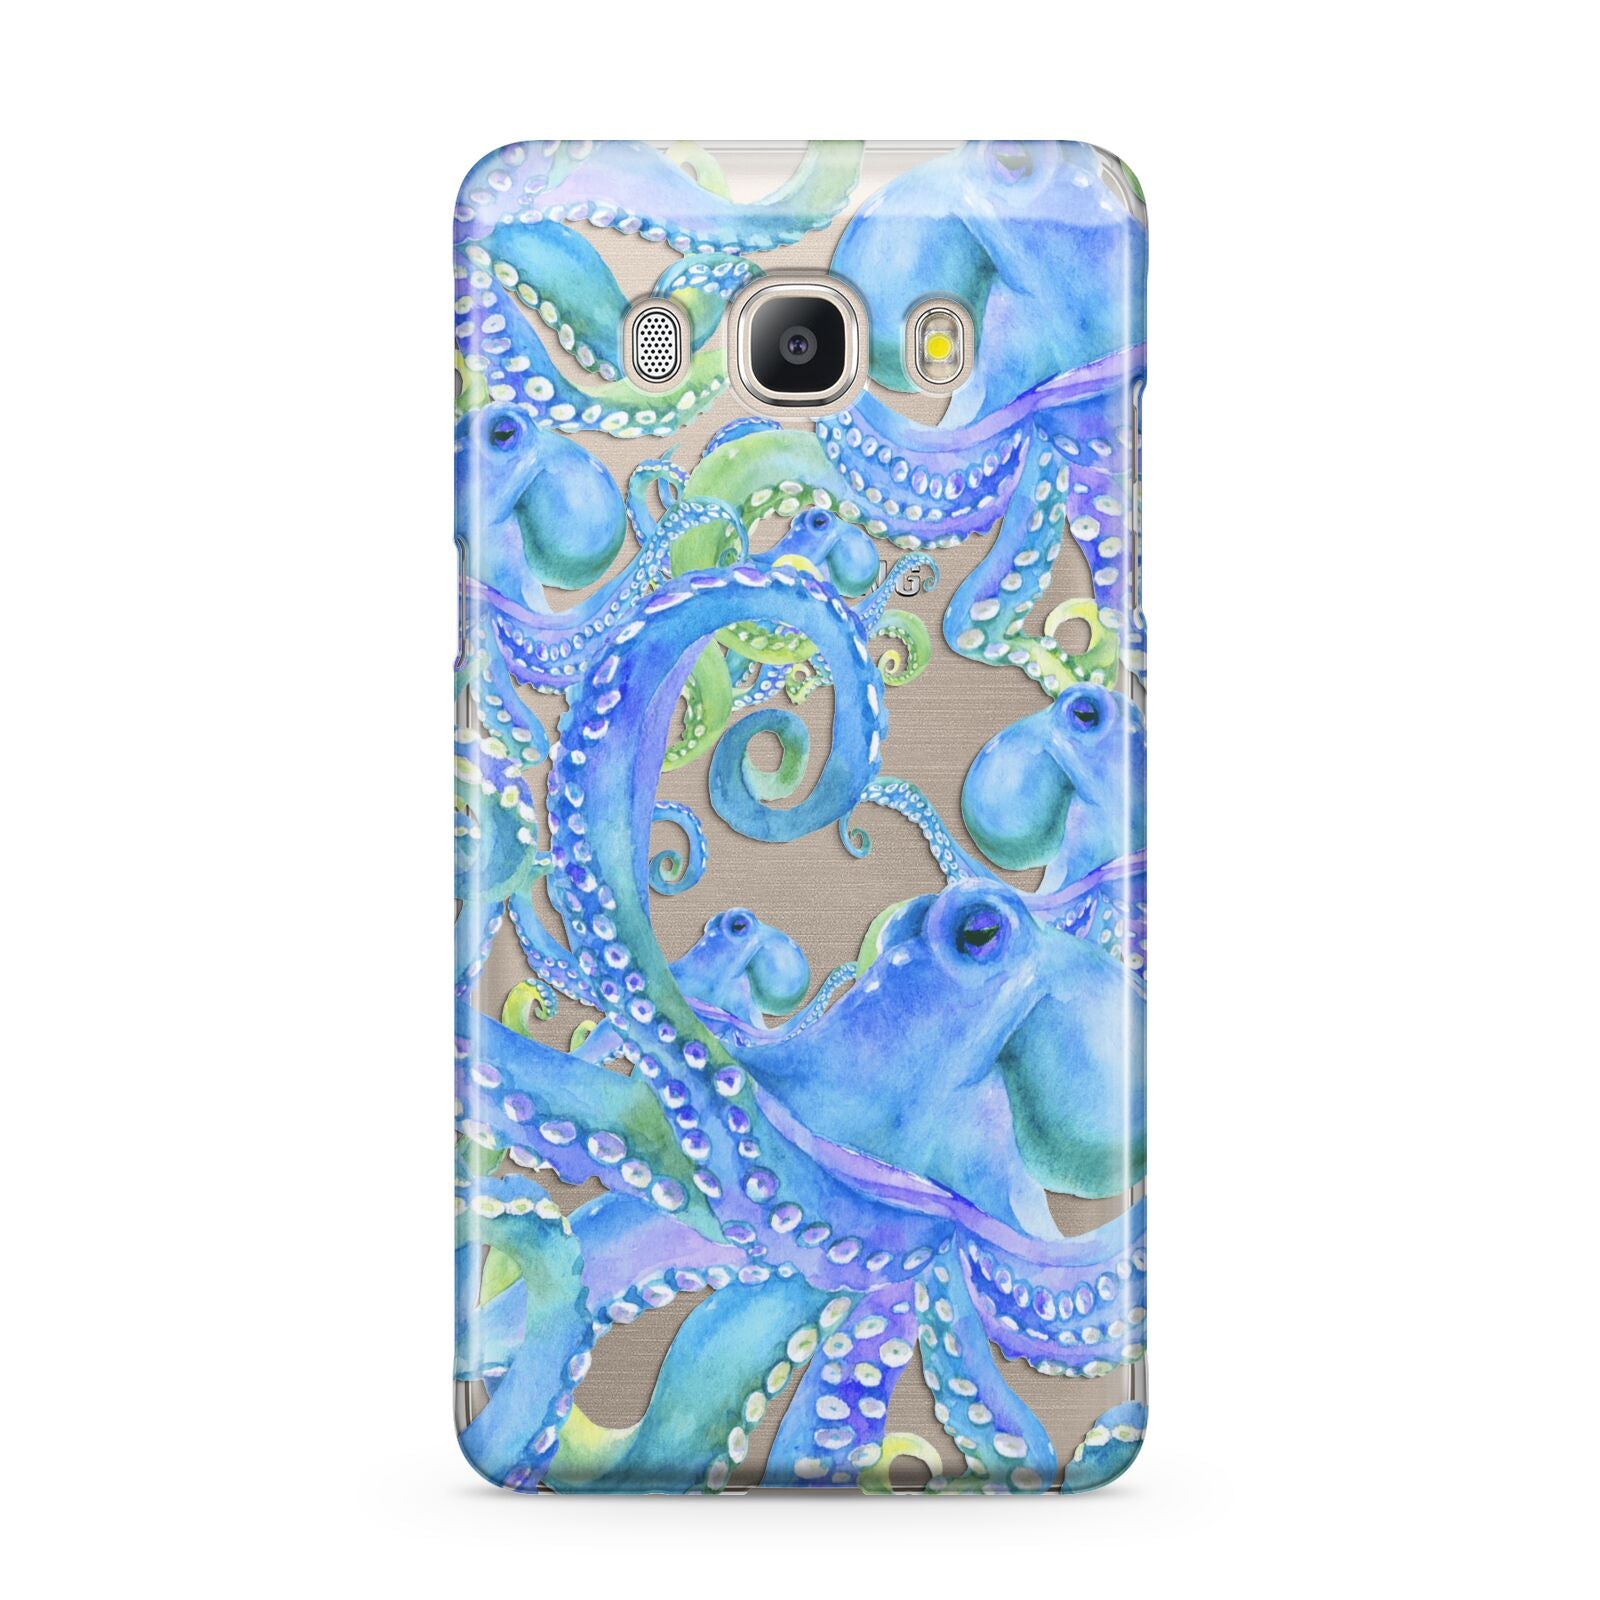 Octopus Samsung Galaxy J5 2016 Case